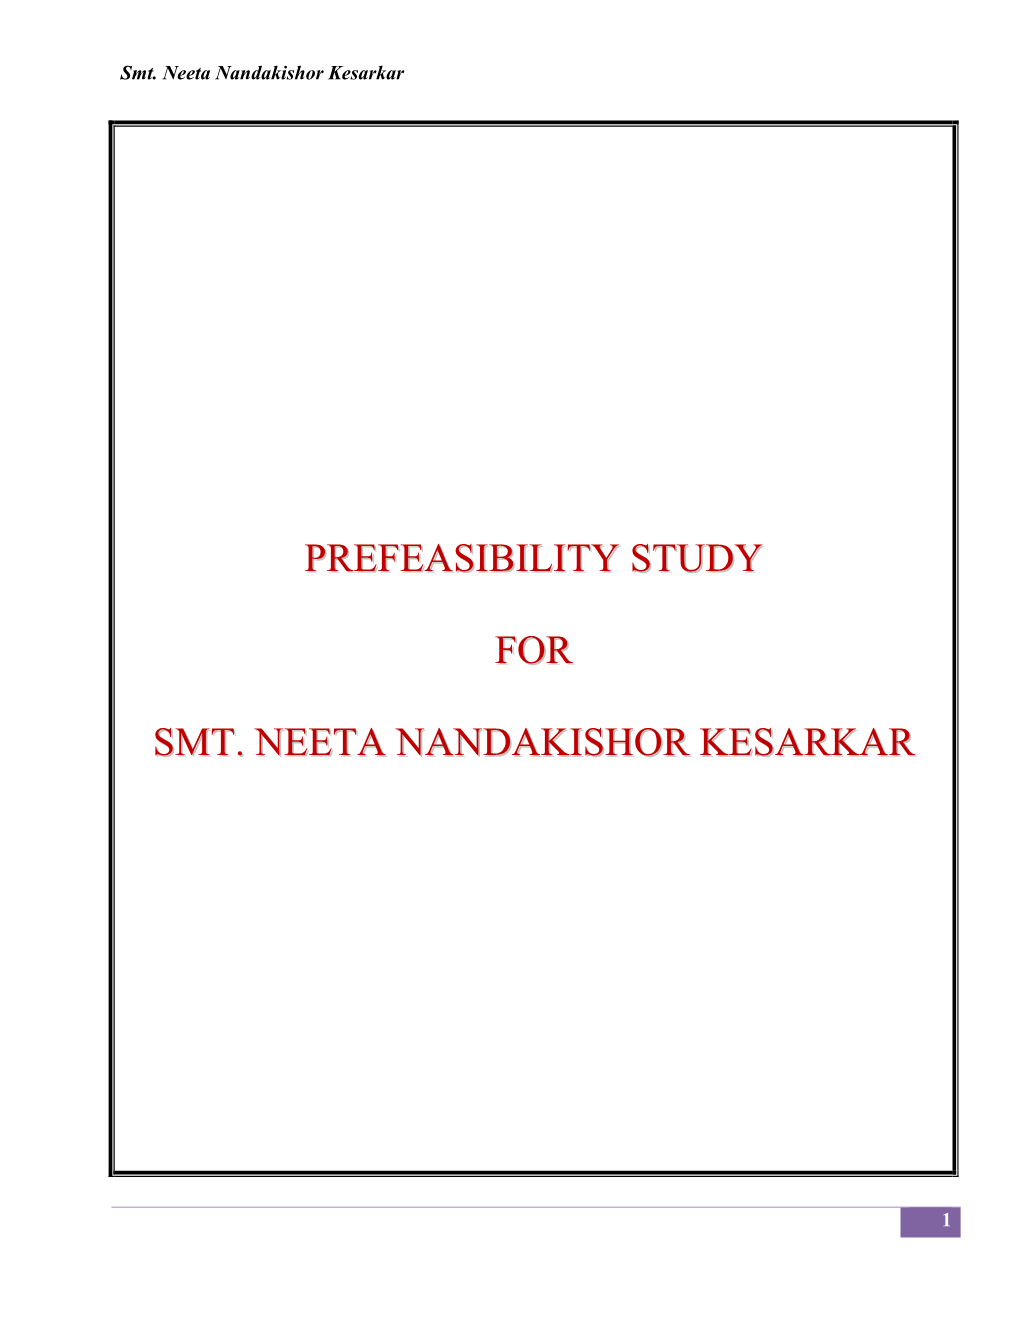 Prefeasibility Study for Smt. Neeta Nandakishor Kesarkar